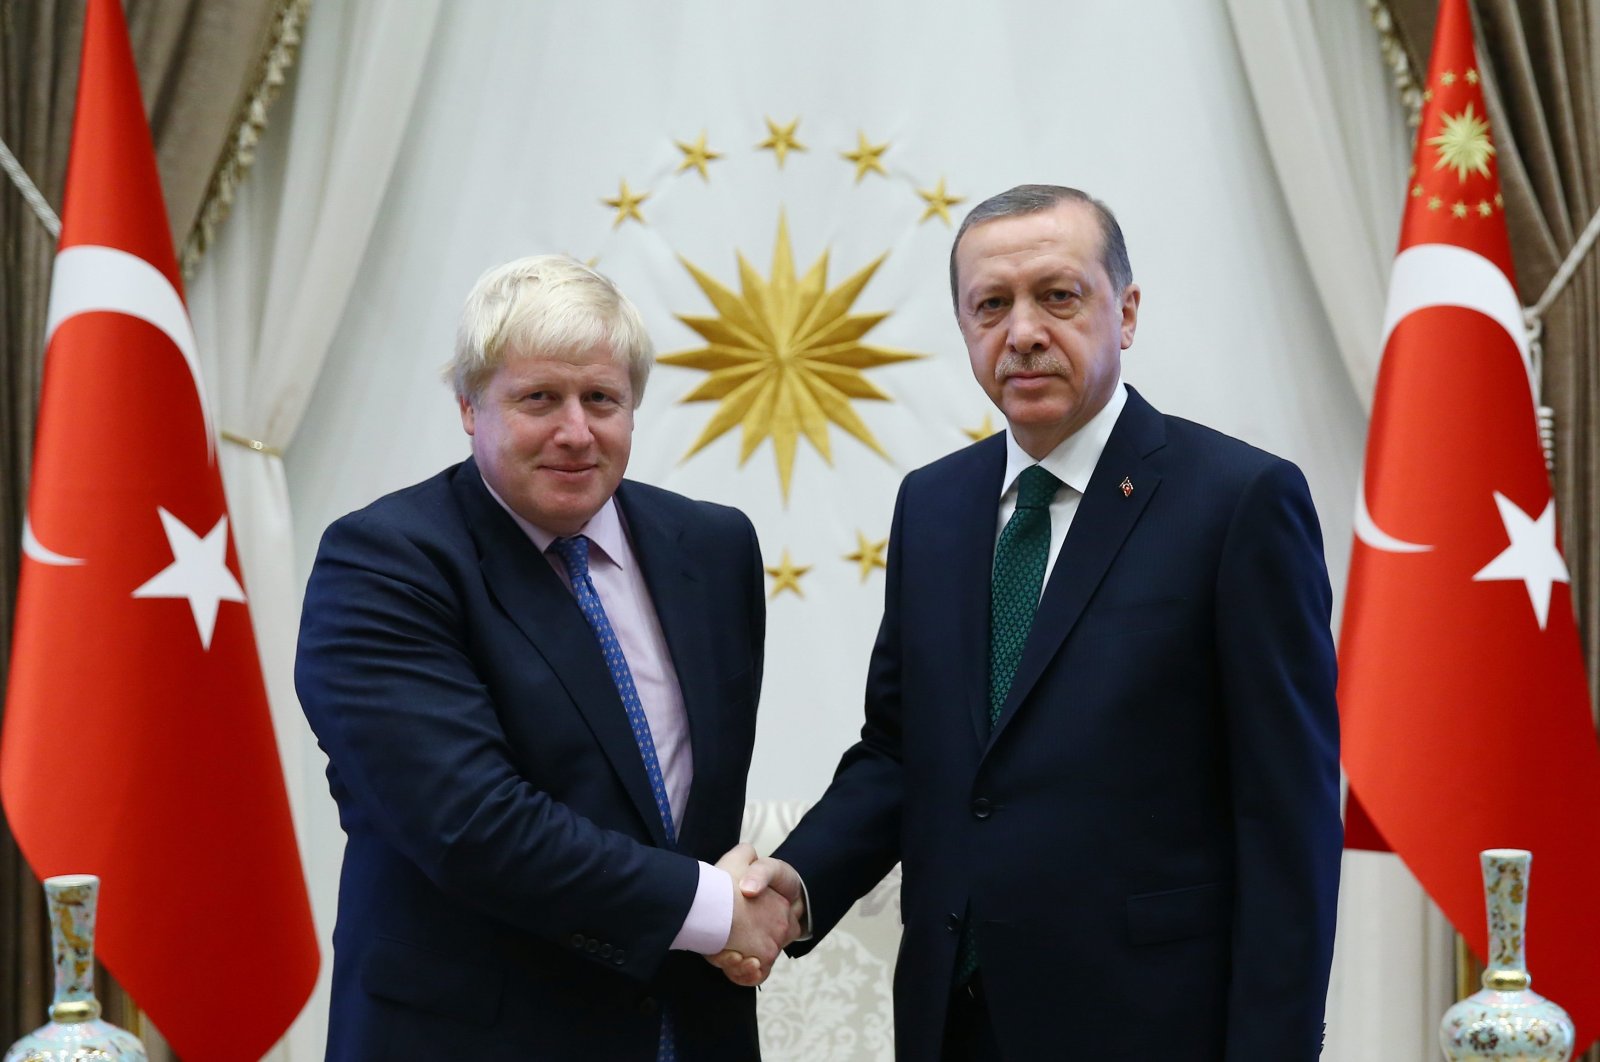 President Recep Tayyip Erdoğan and British Prime Minister Boris Johnson are seen during a meeting in the capital Ankara, Turkey, Sept. 28, 2016. (AA)